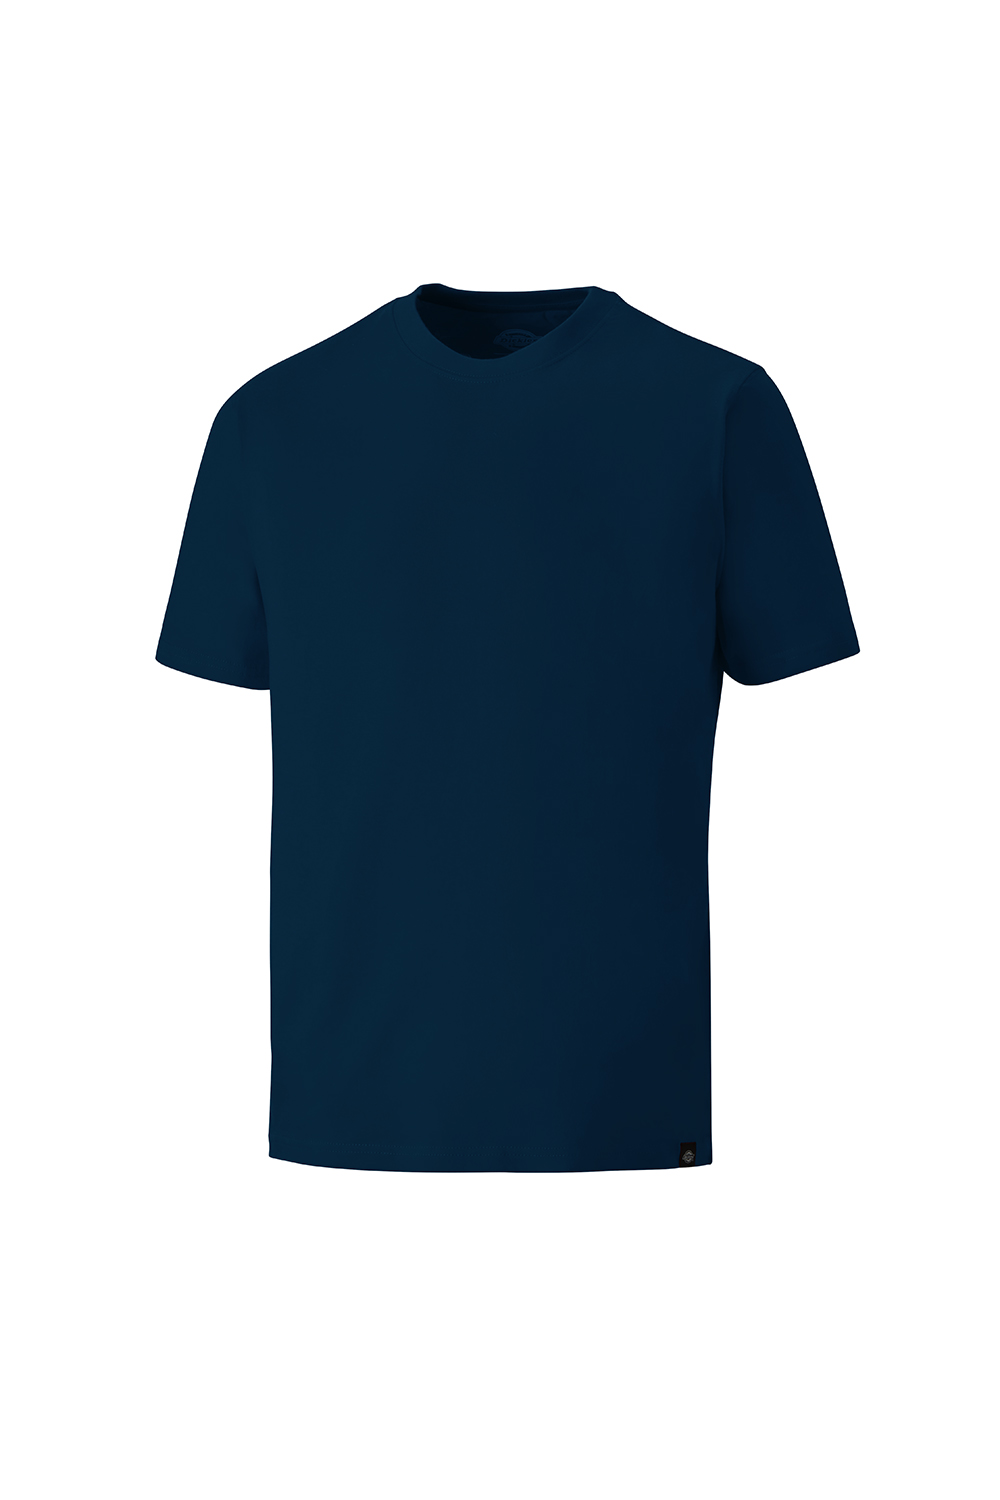 Dickies Unisex T-Shirt marineblau, 100% Baumwolle